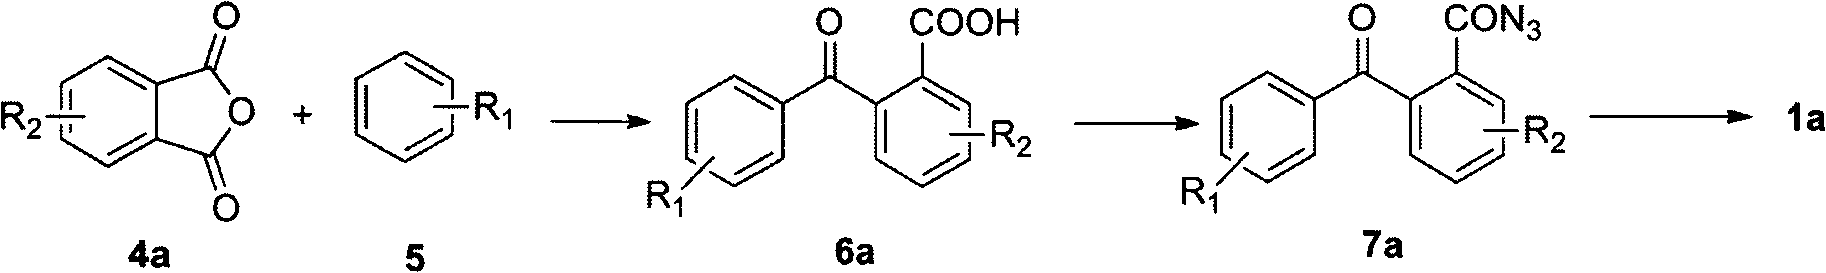 Method for preparing dinitrogen heterocyclooctatetraene